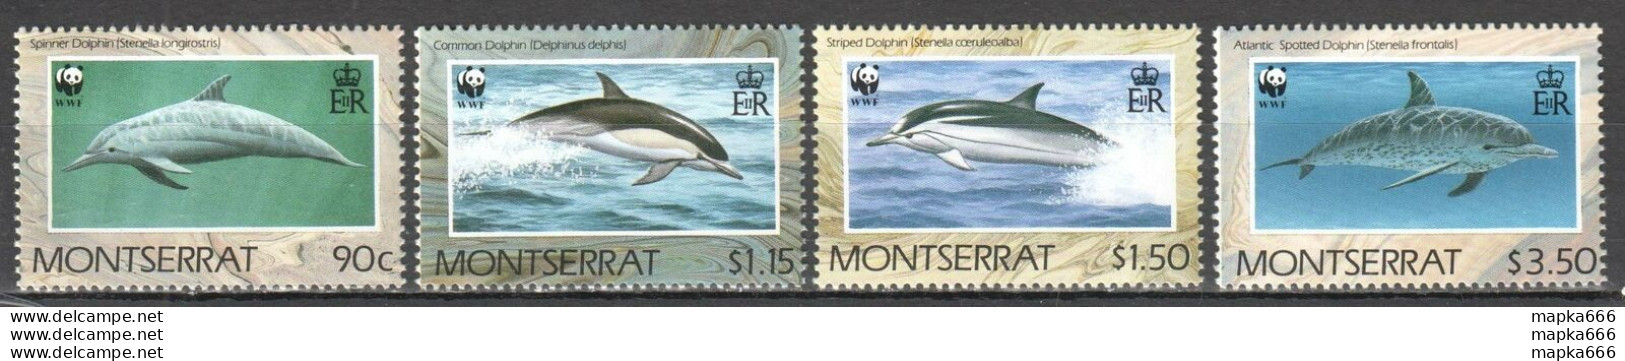 Tk015 1990 Montserrat Wwf Fauna Dolphins #706-09 Michel 16 Euro 1Set Mnh - Nuevos